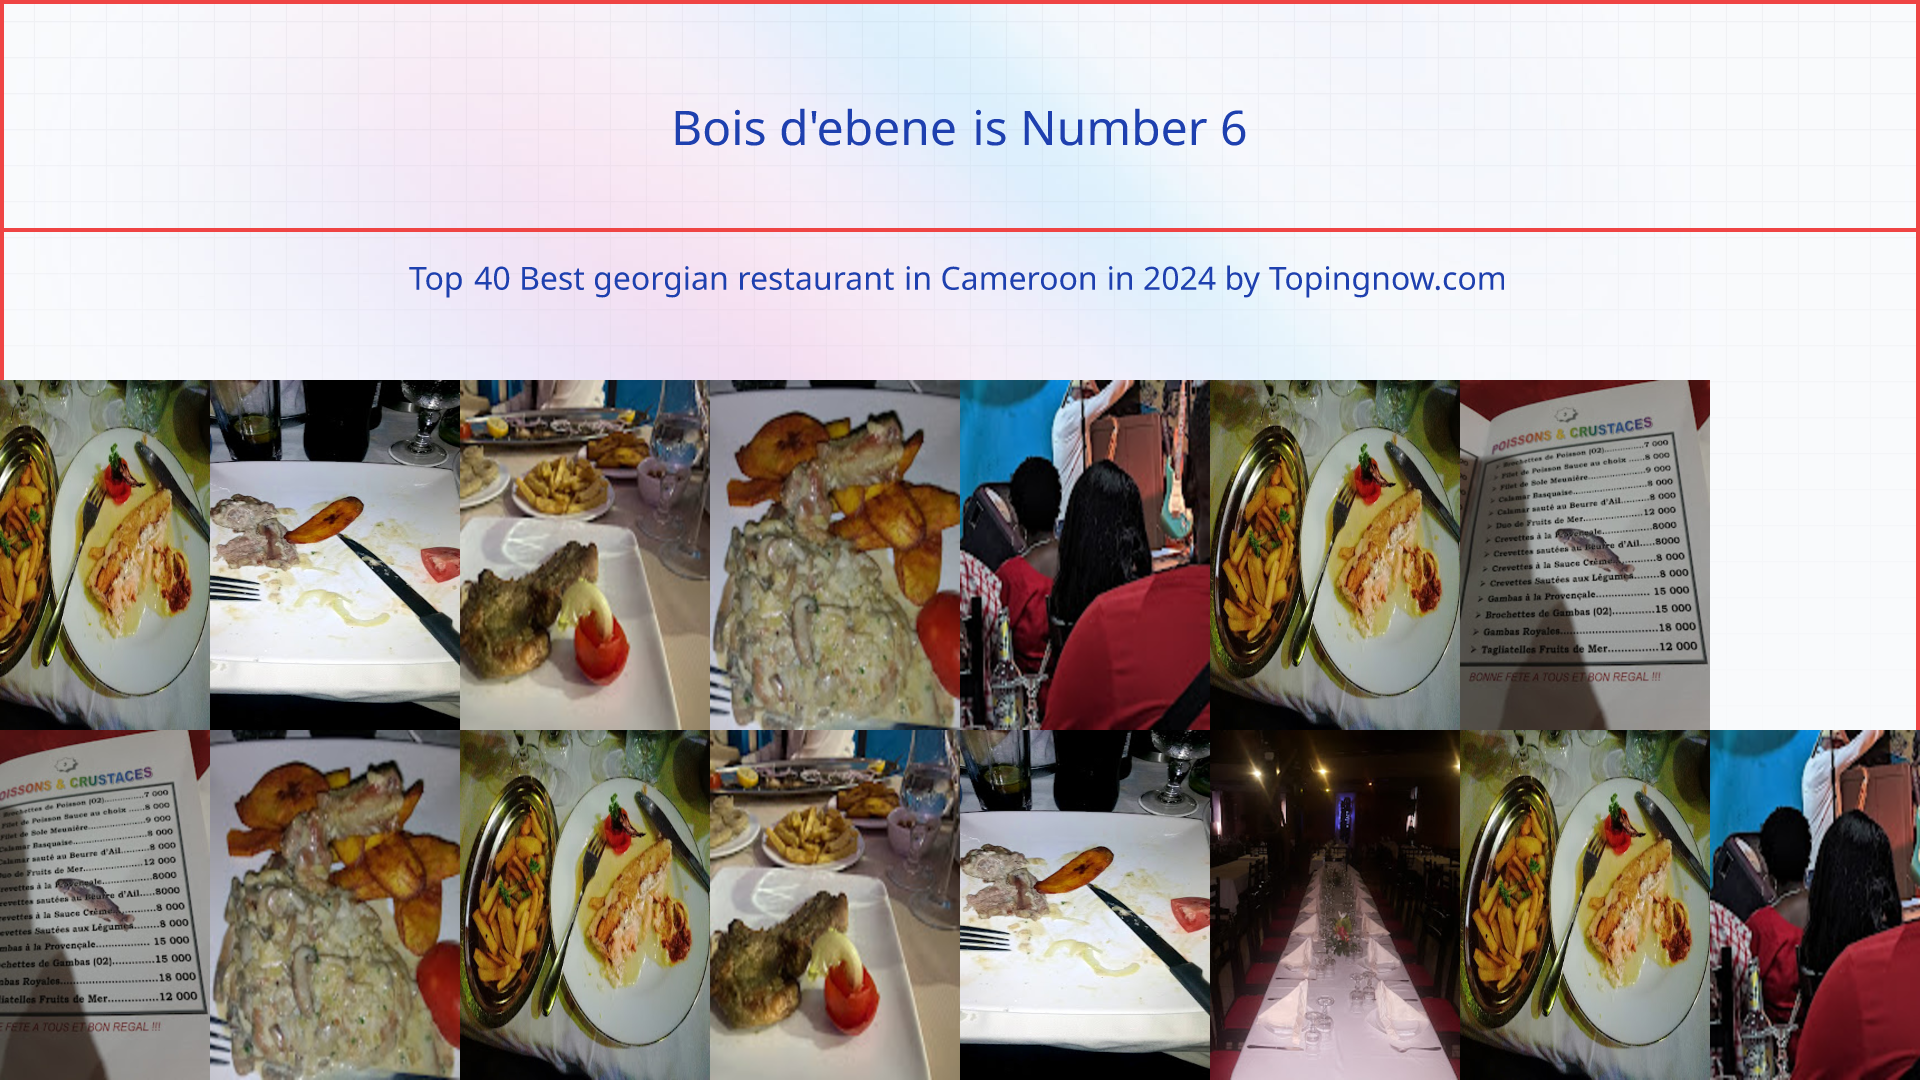 Bois d'ebene: Top 40 Best georgian restaurant in Cameroon in 2024